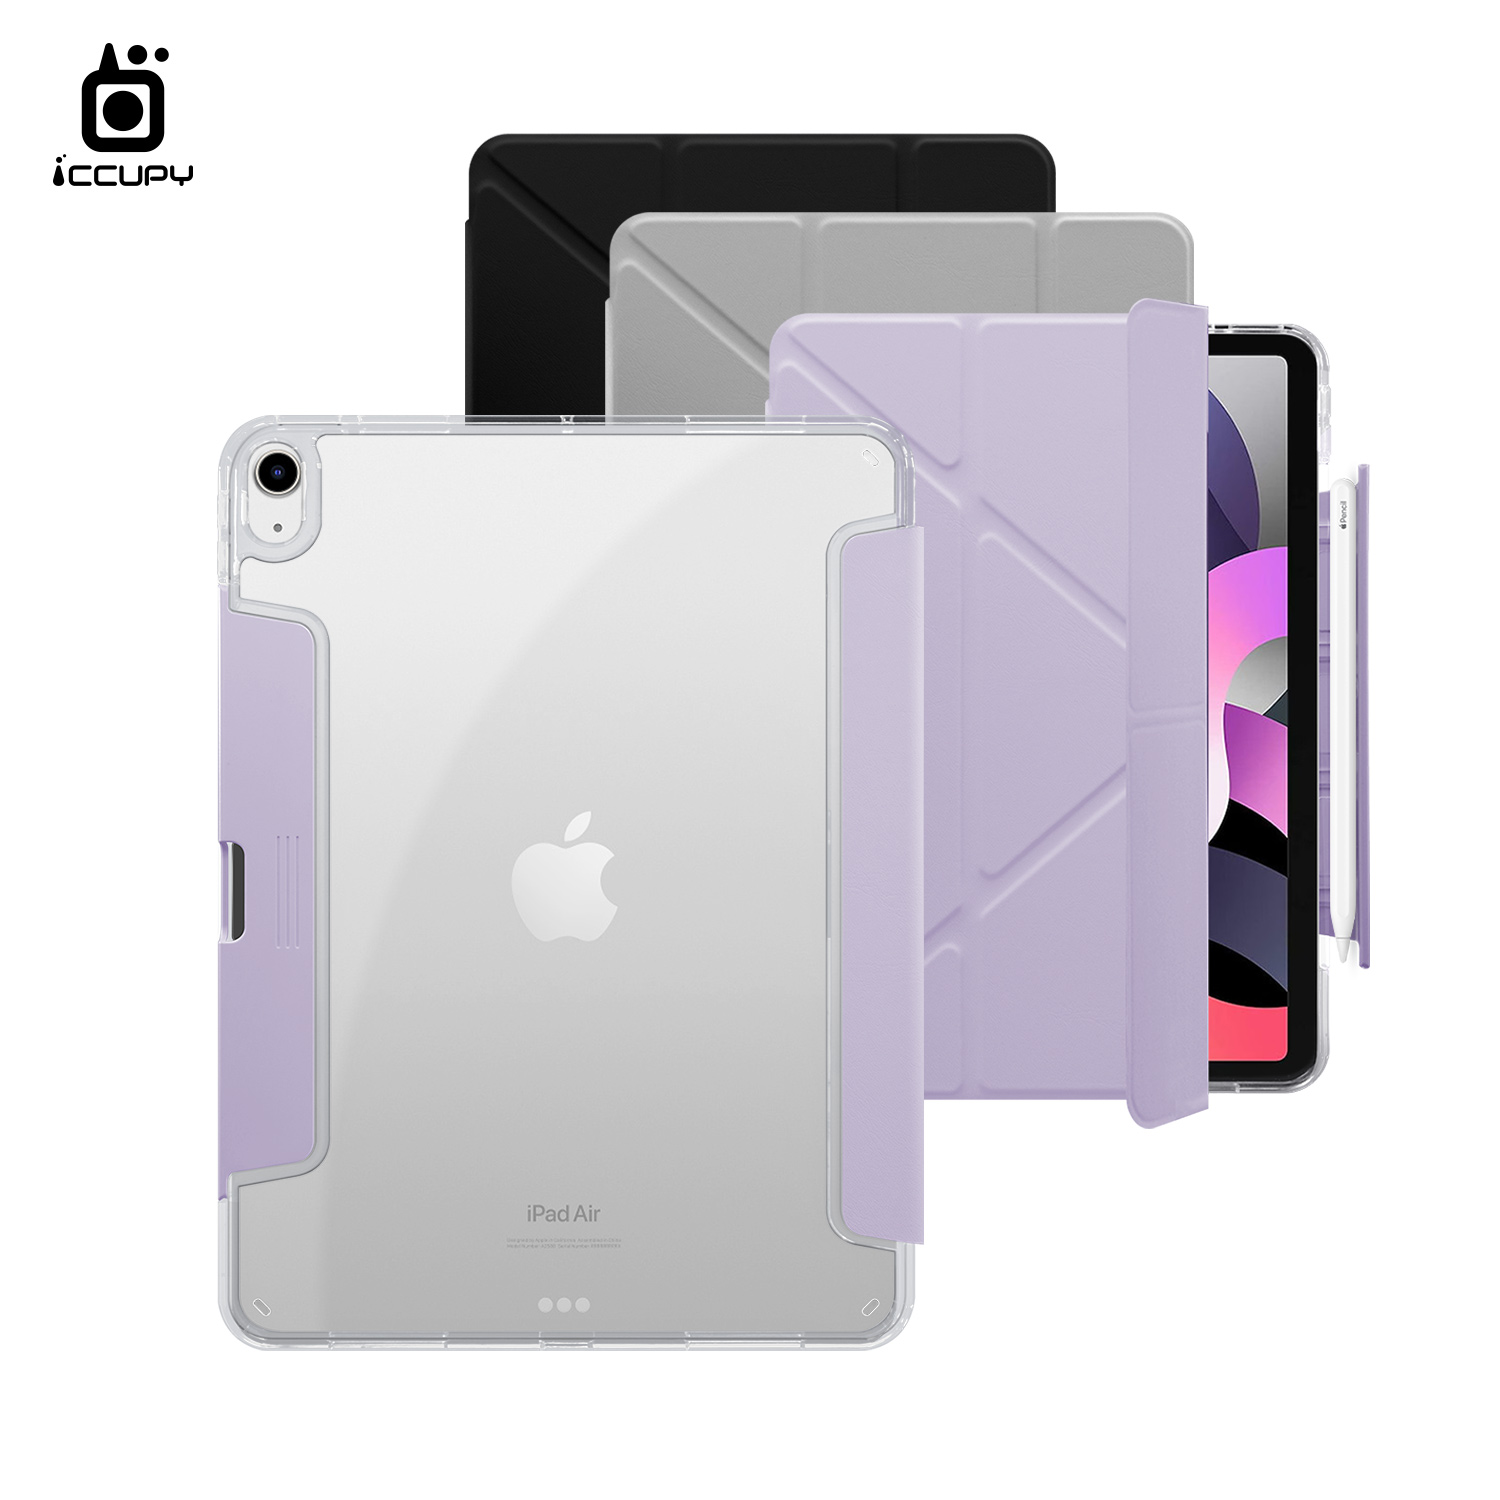 【iCCUPY黑占盾For iPad】黑占盾平板HD系列-隱藏式抽屜筆槽(共三色) For iPad Air (2020)第4代 10.9吋